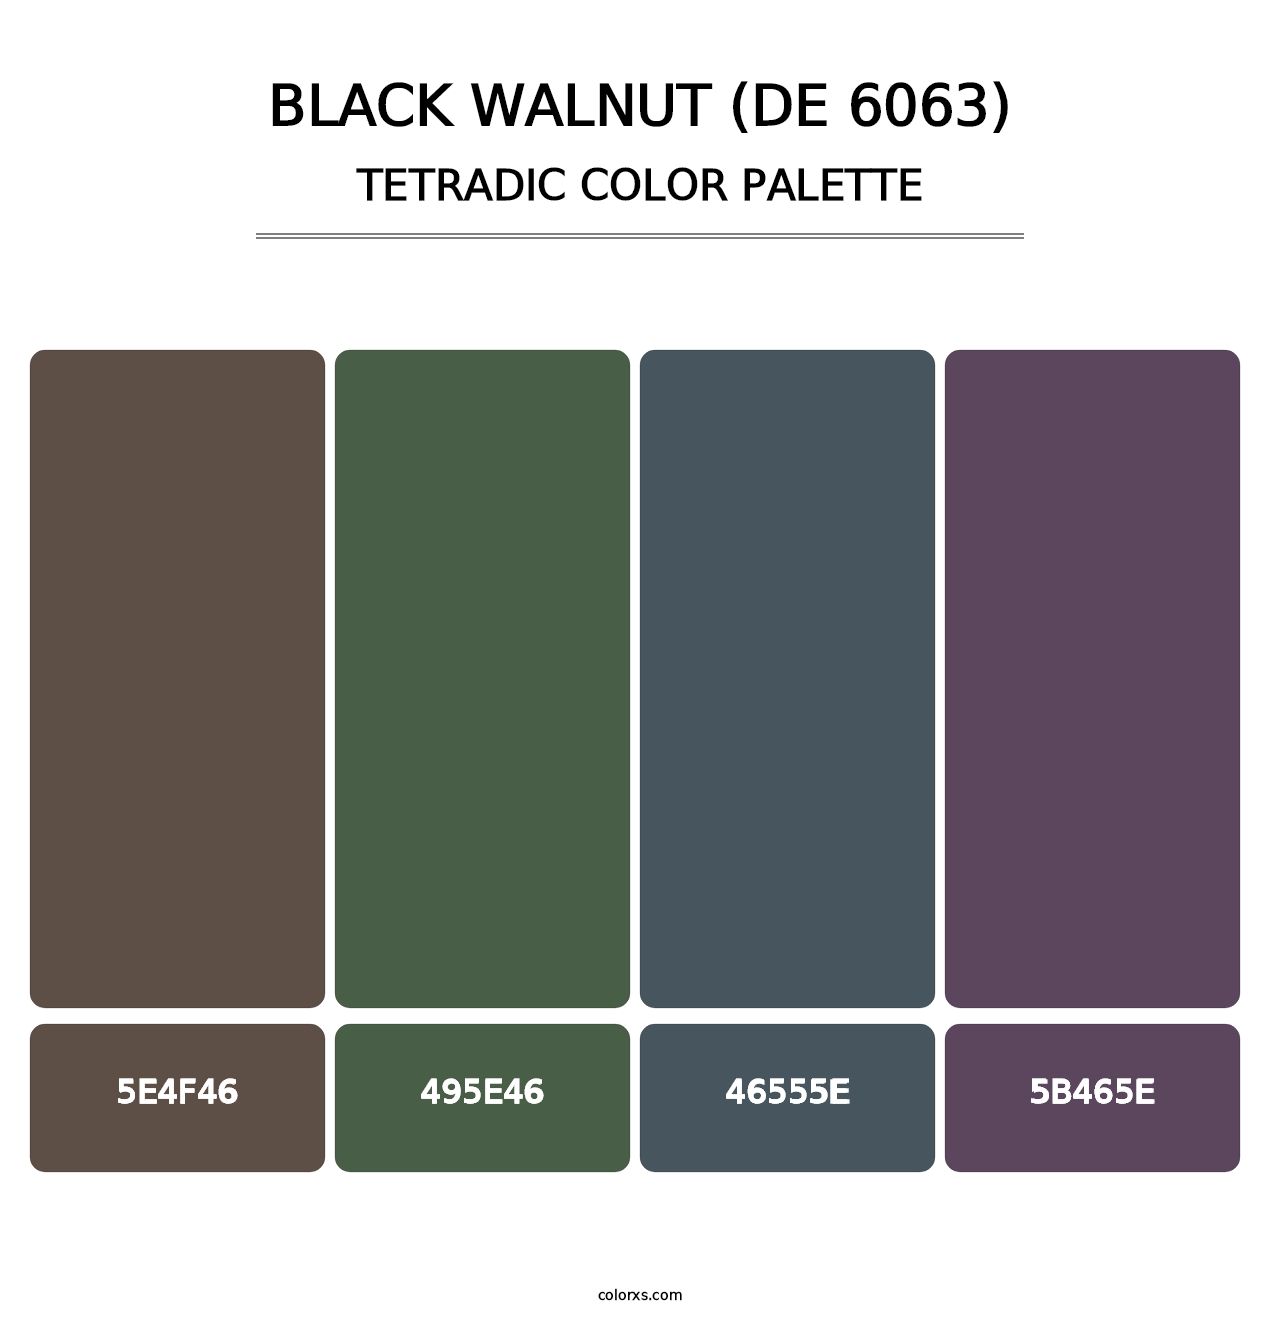 Black Walnut (DE 6063) - Tetradic Color Palette